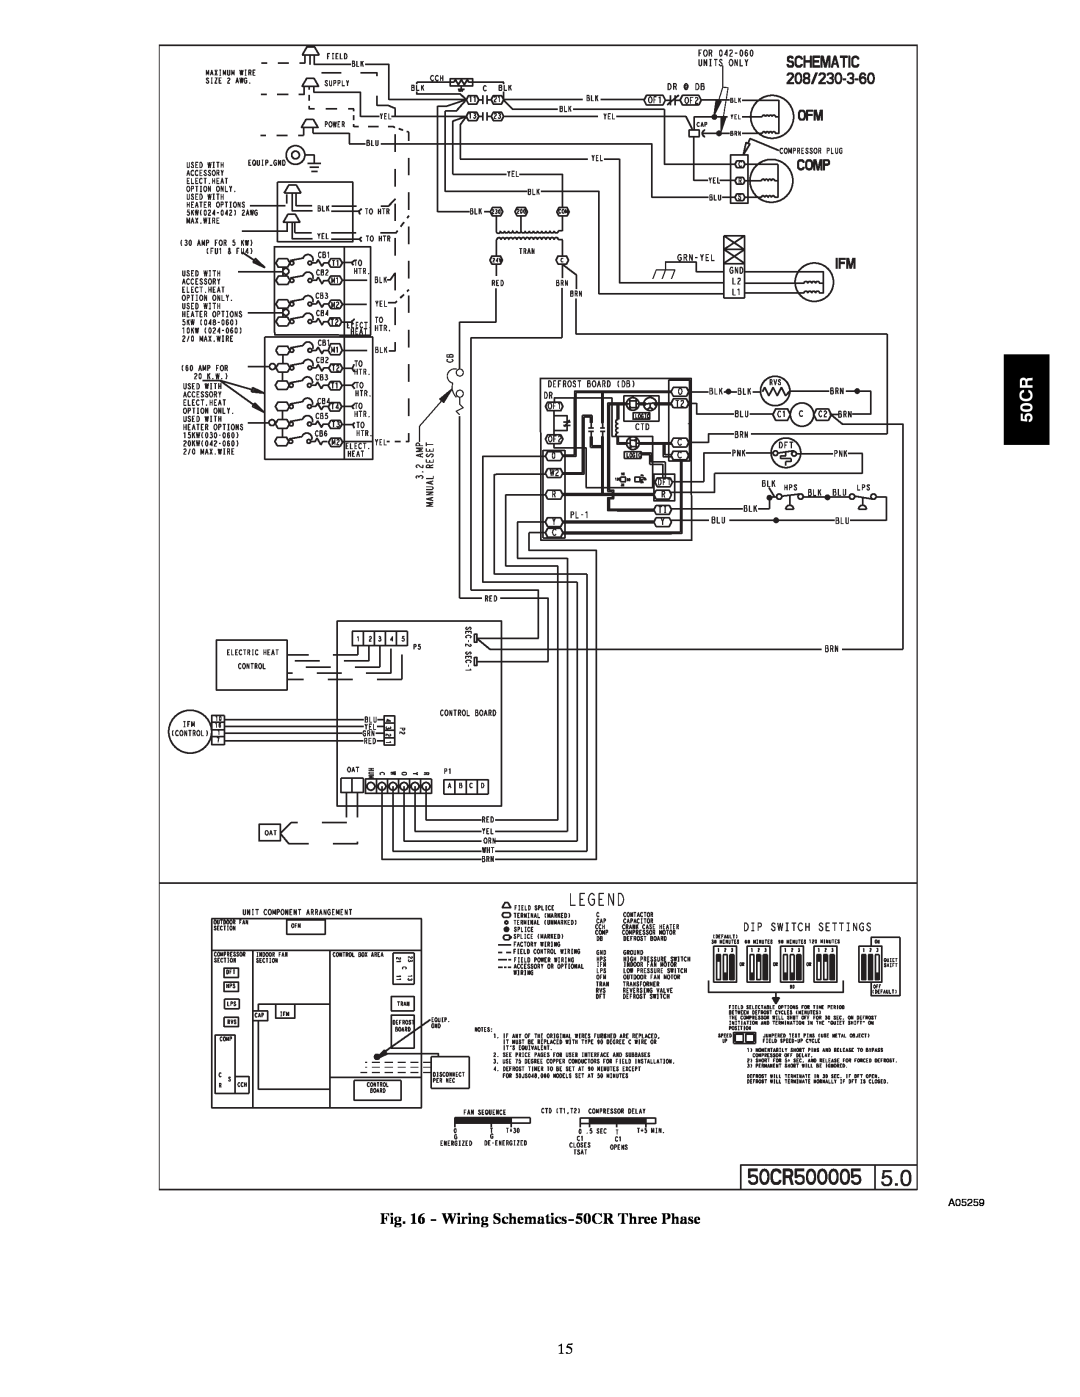 Carrier installation instructions Wiring Schematics-50CRThree Phase, A05259 